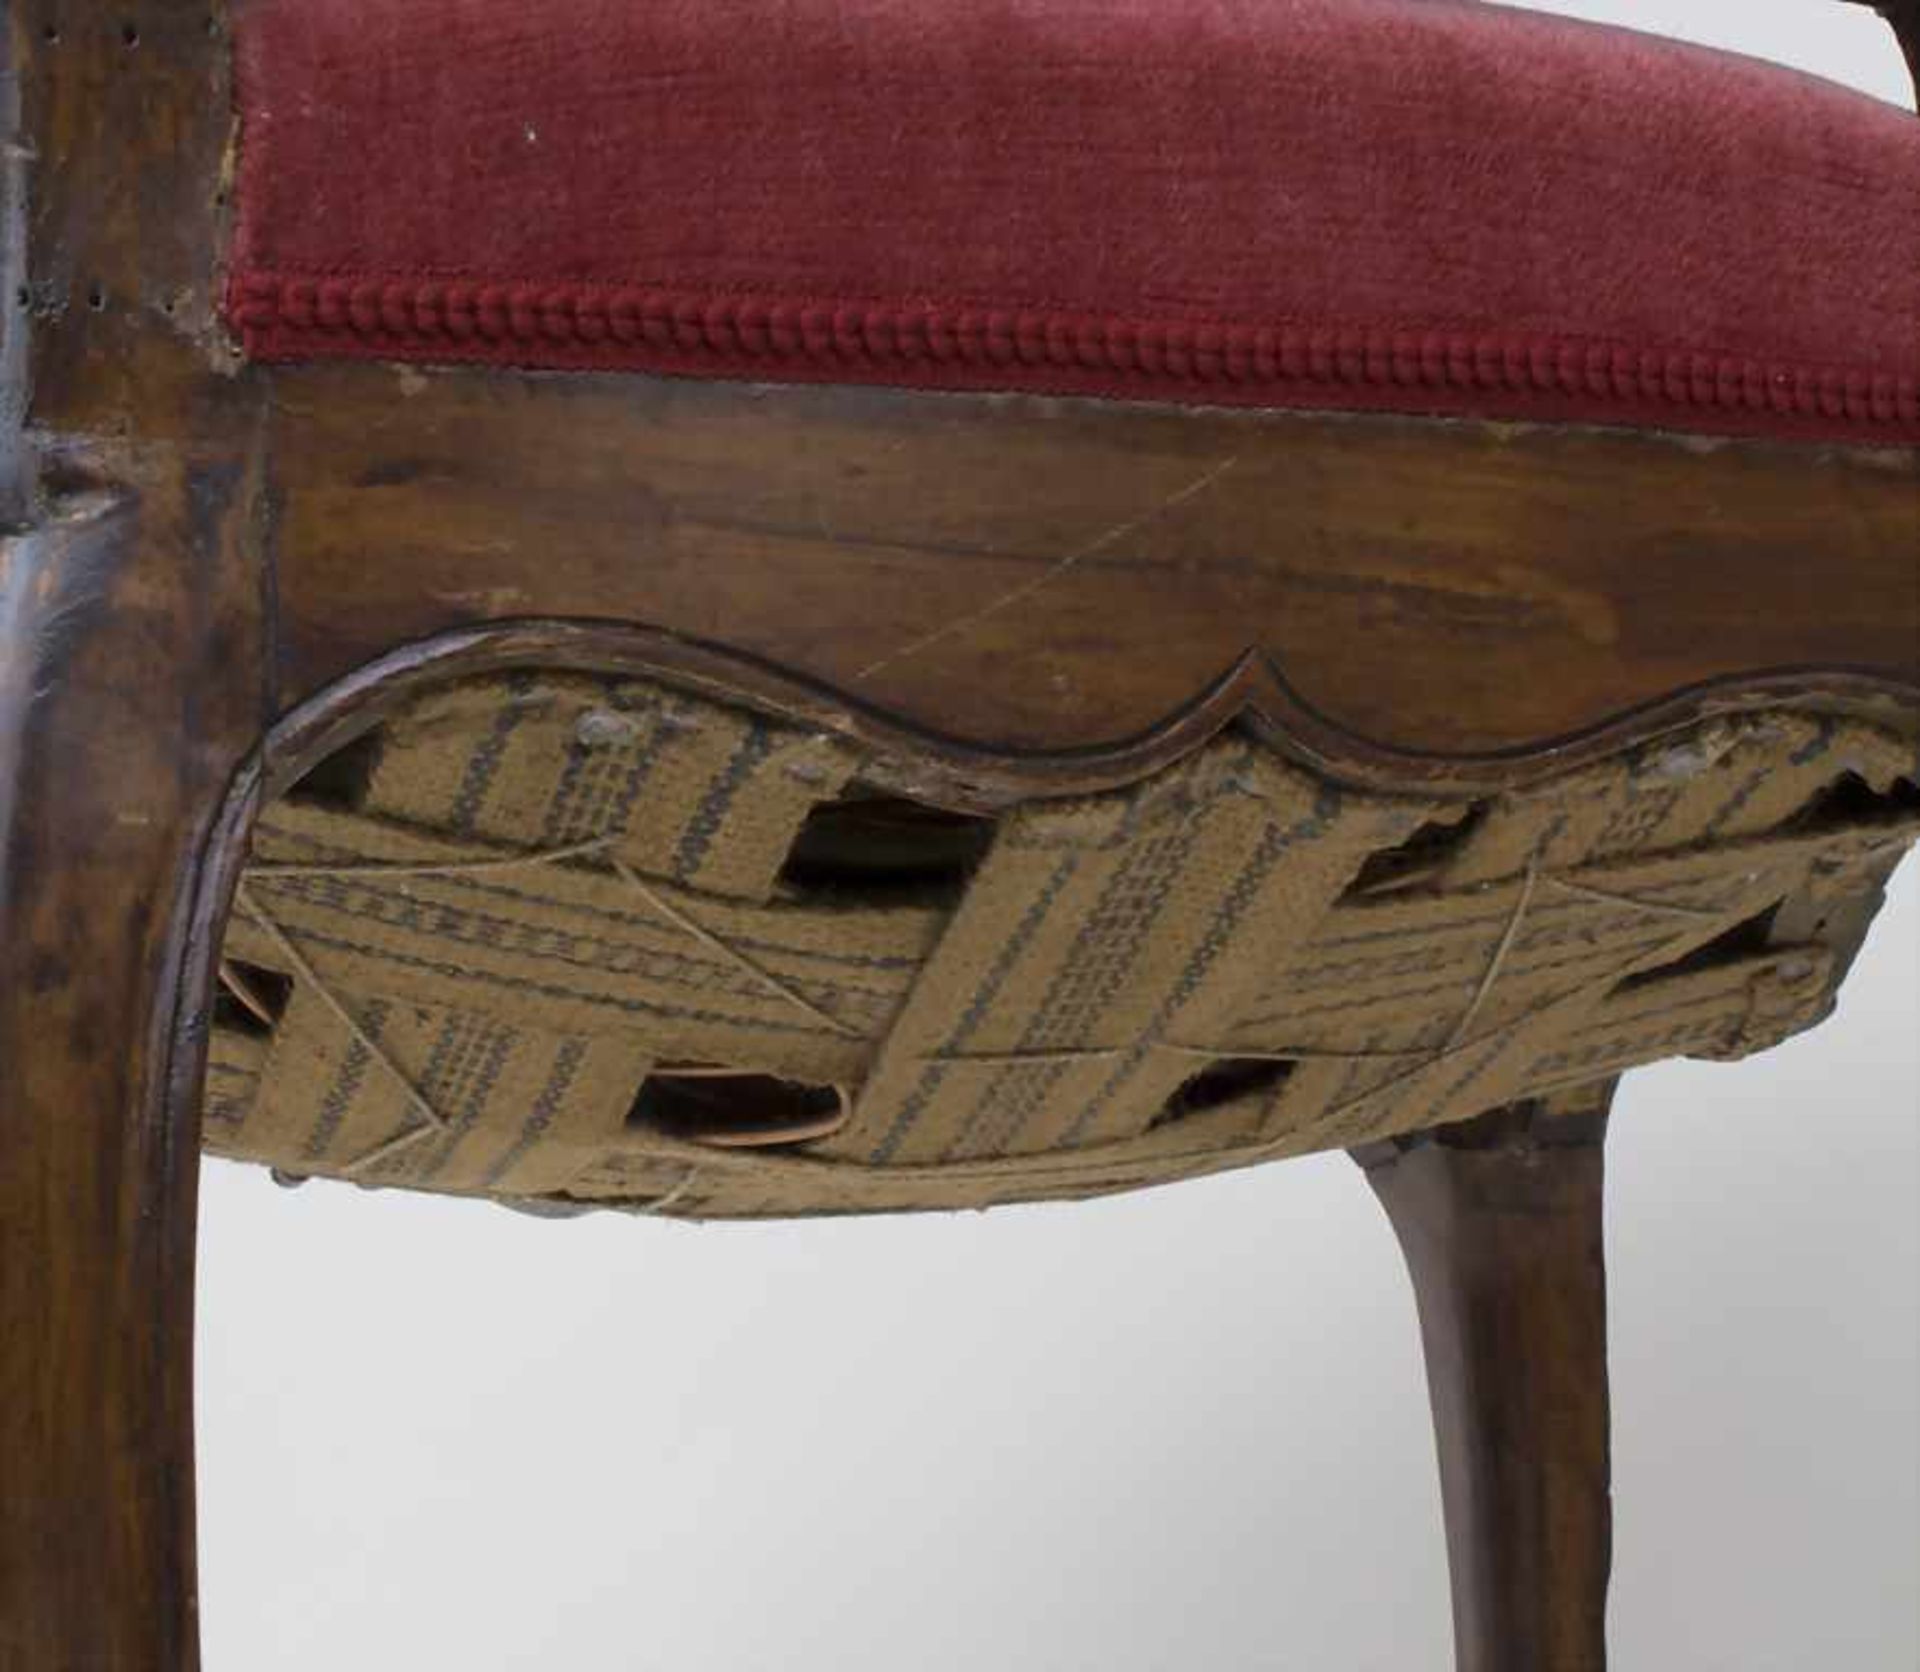 Rokoko--Stuhl mit Rocaillendekor / A Rococo chair with rocaillesMaterial: Holz, geschnitzt, dunkel - Image 5 of 5